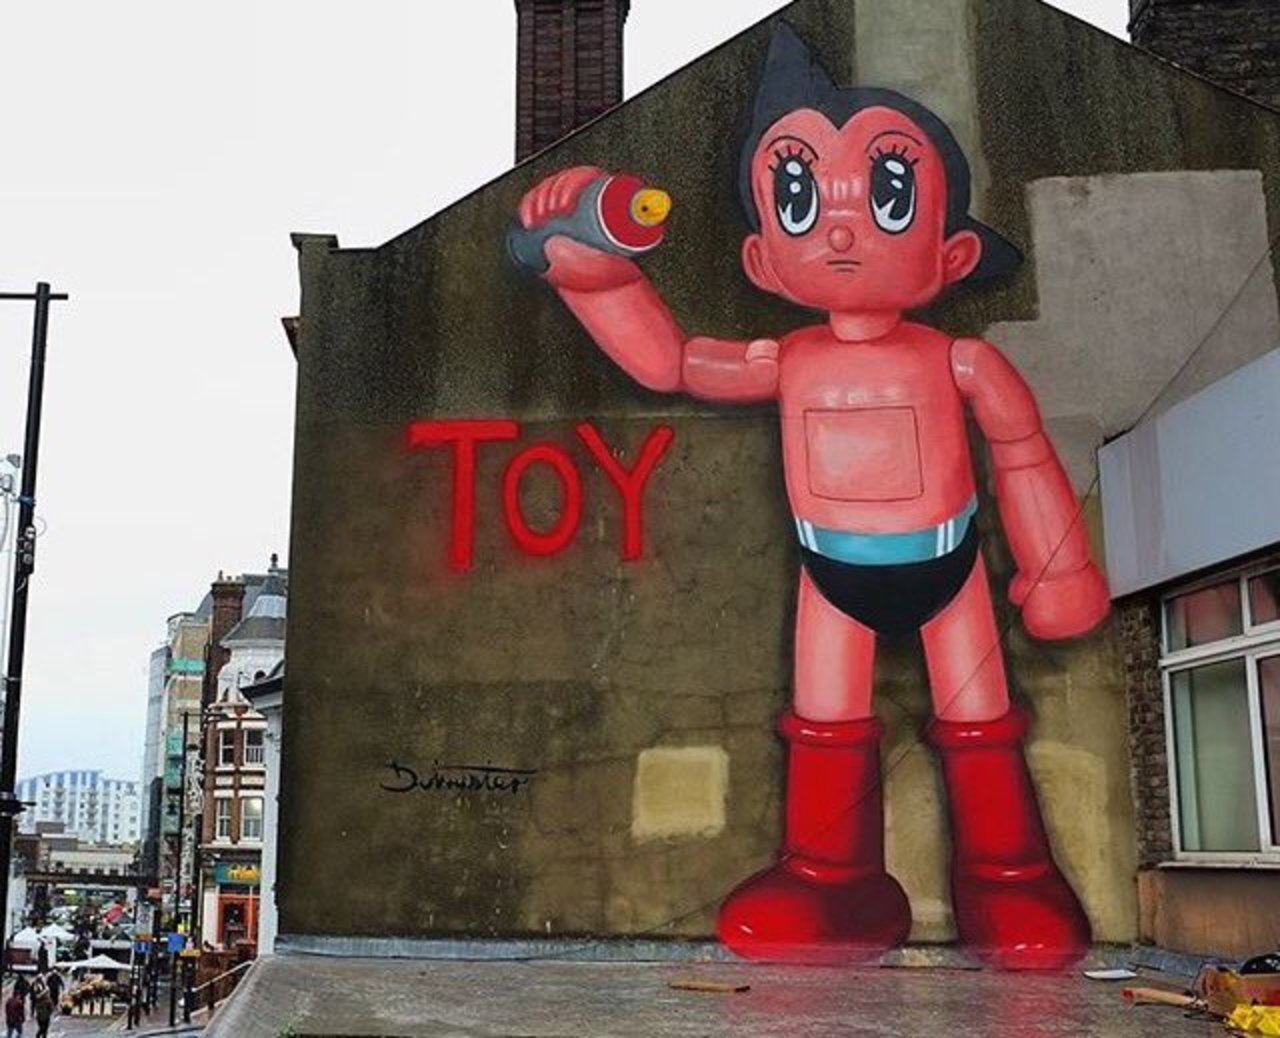 ASTROBOY MURAL IN LONDON UK BY DotMasters#streetart #mural #graffiti #art https://t.co/UgAToaSY5e